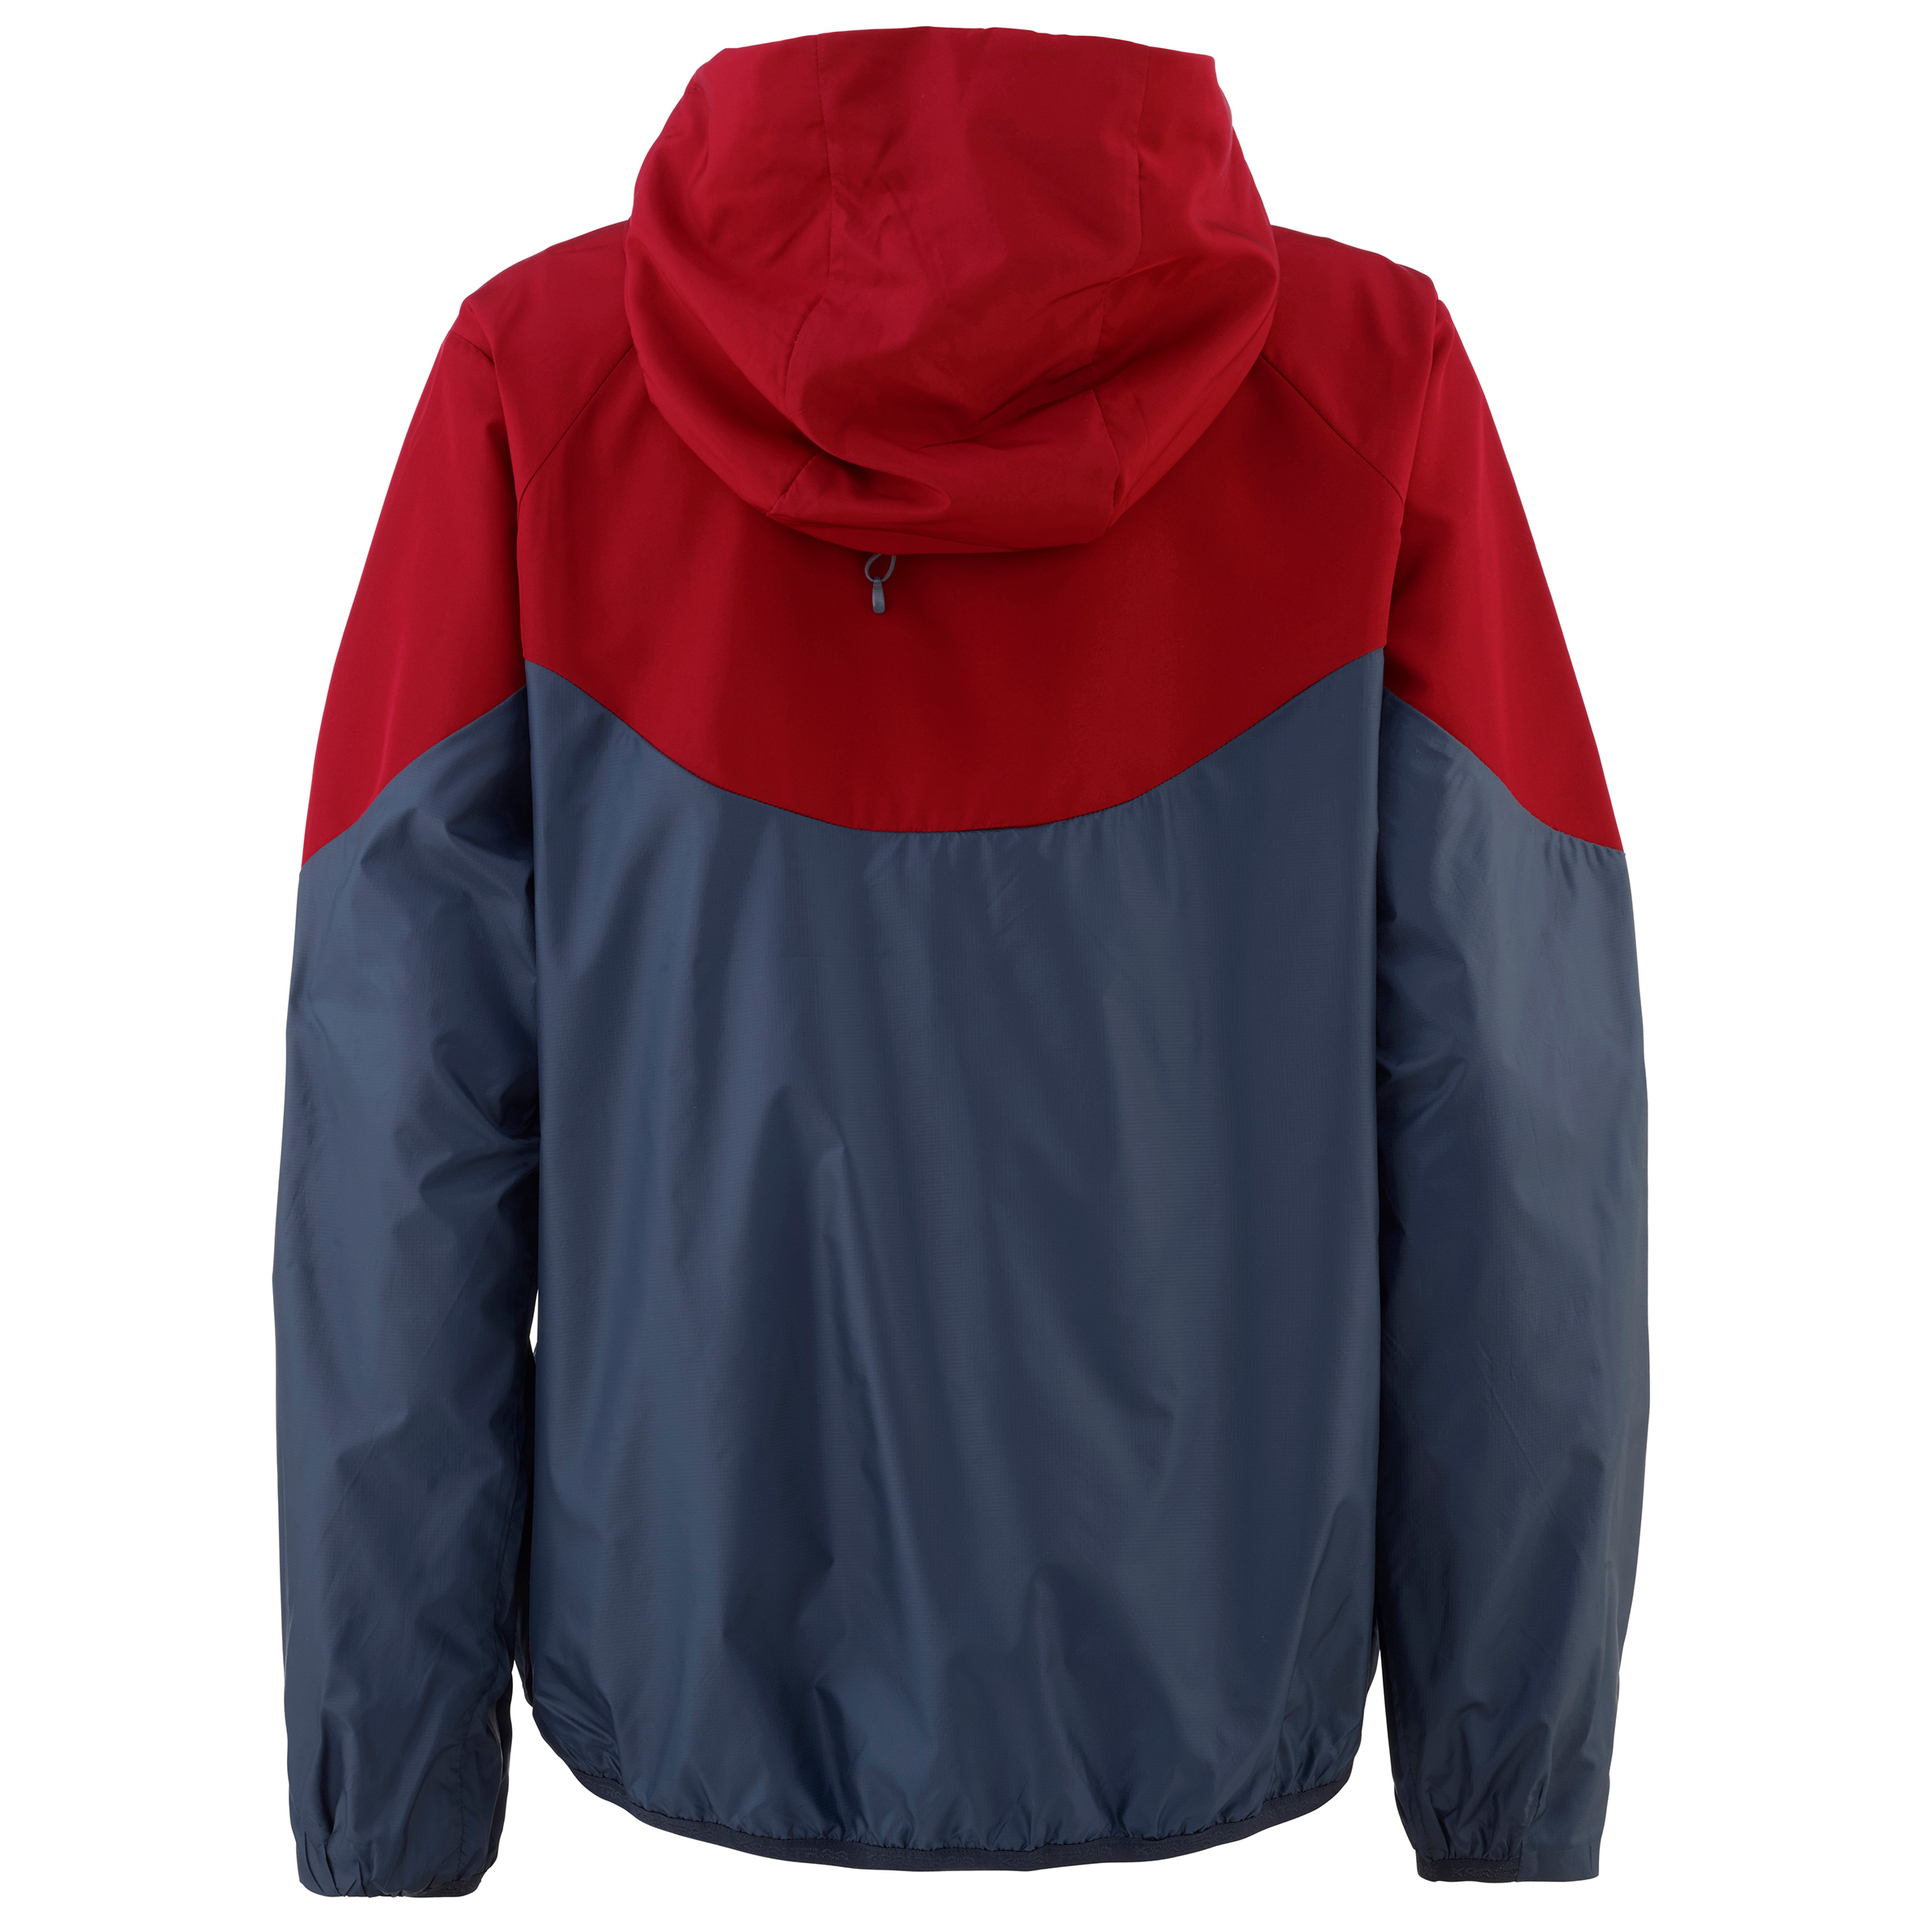 frisliv-kari-traa-sanne-wind-jacket-622982-red-back